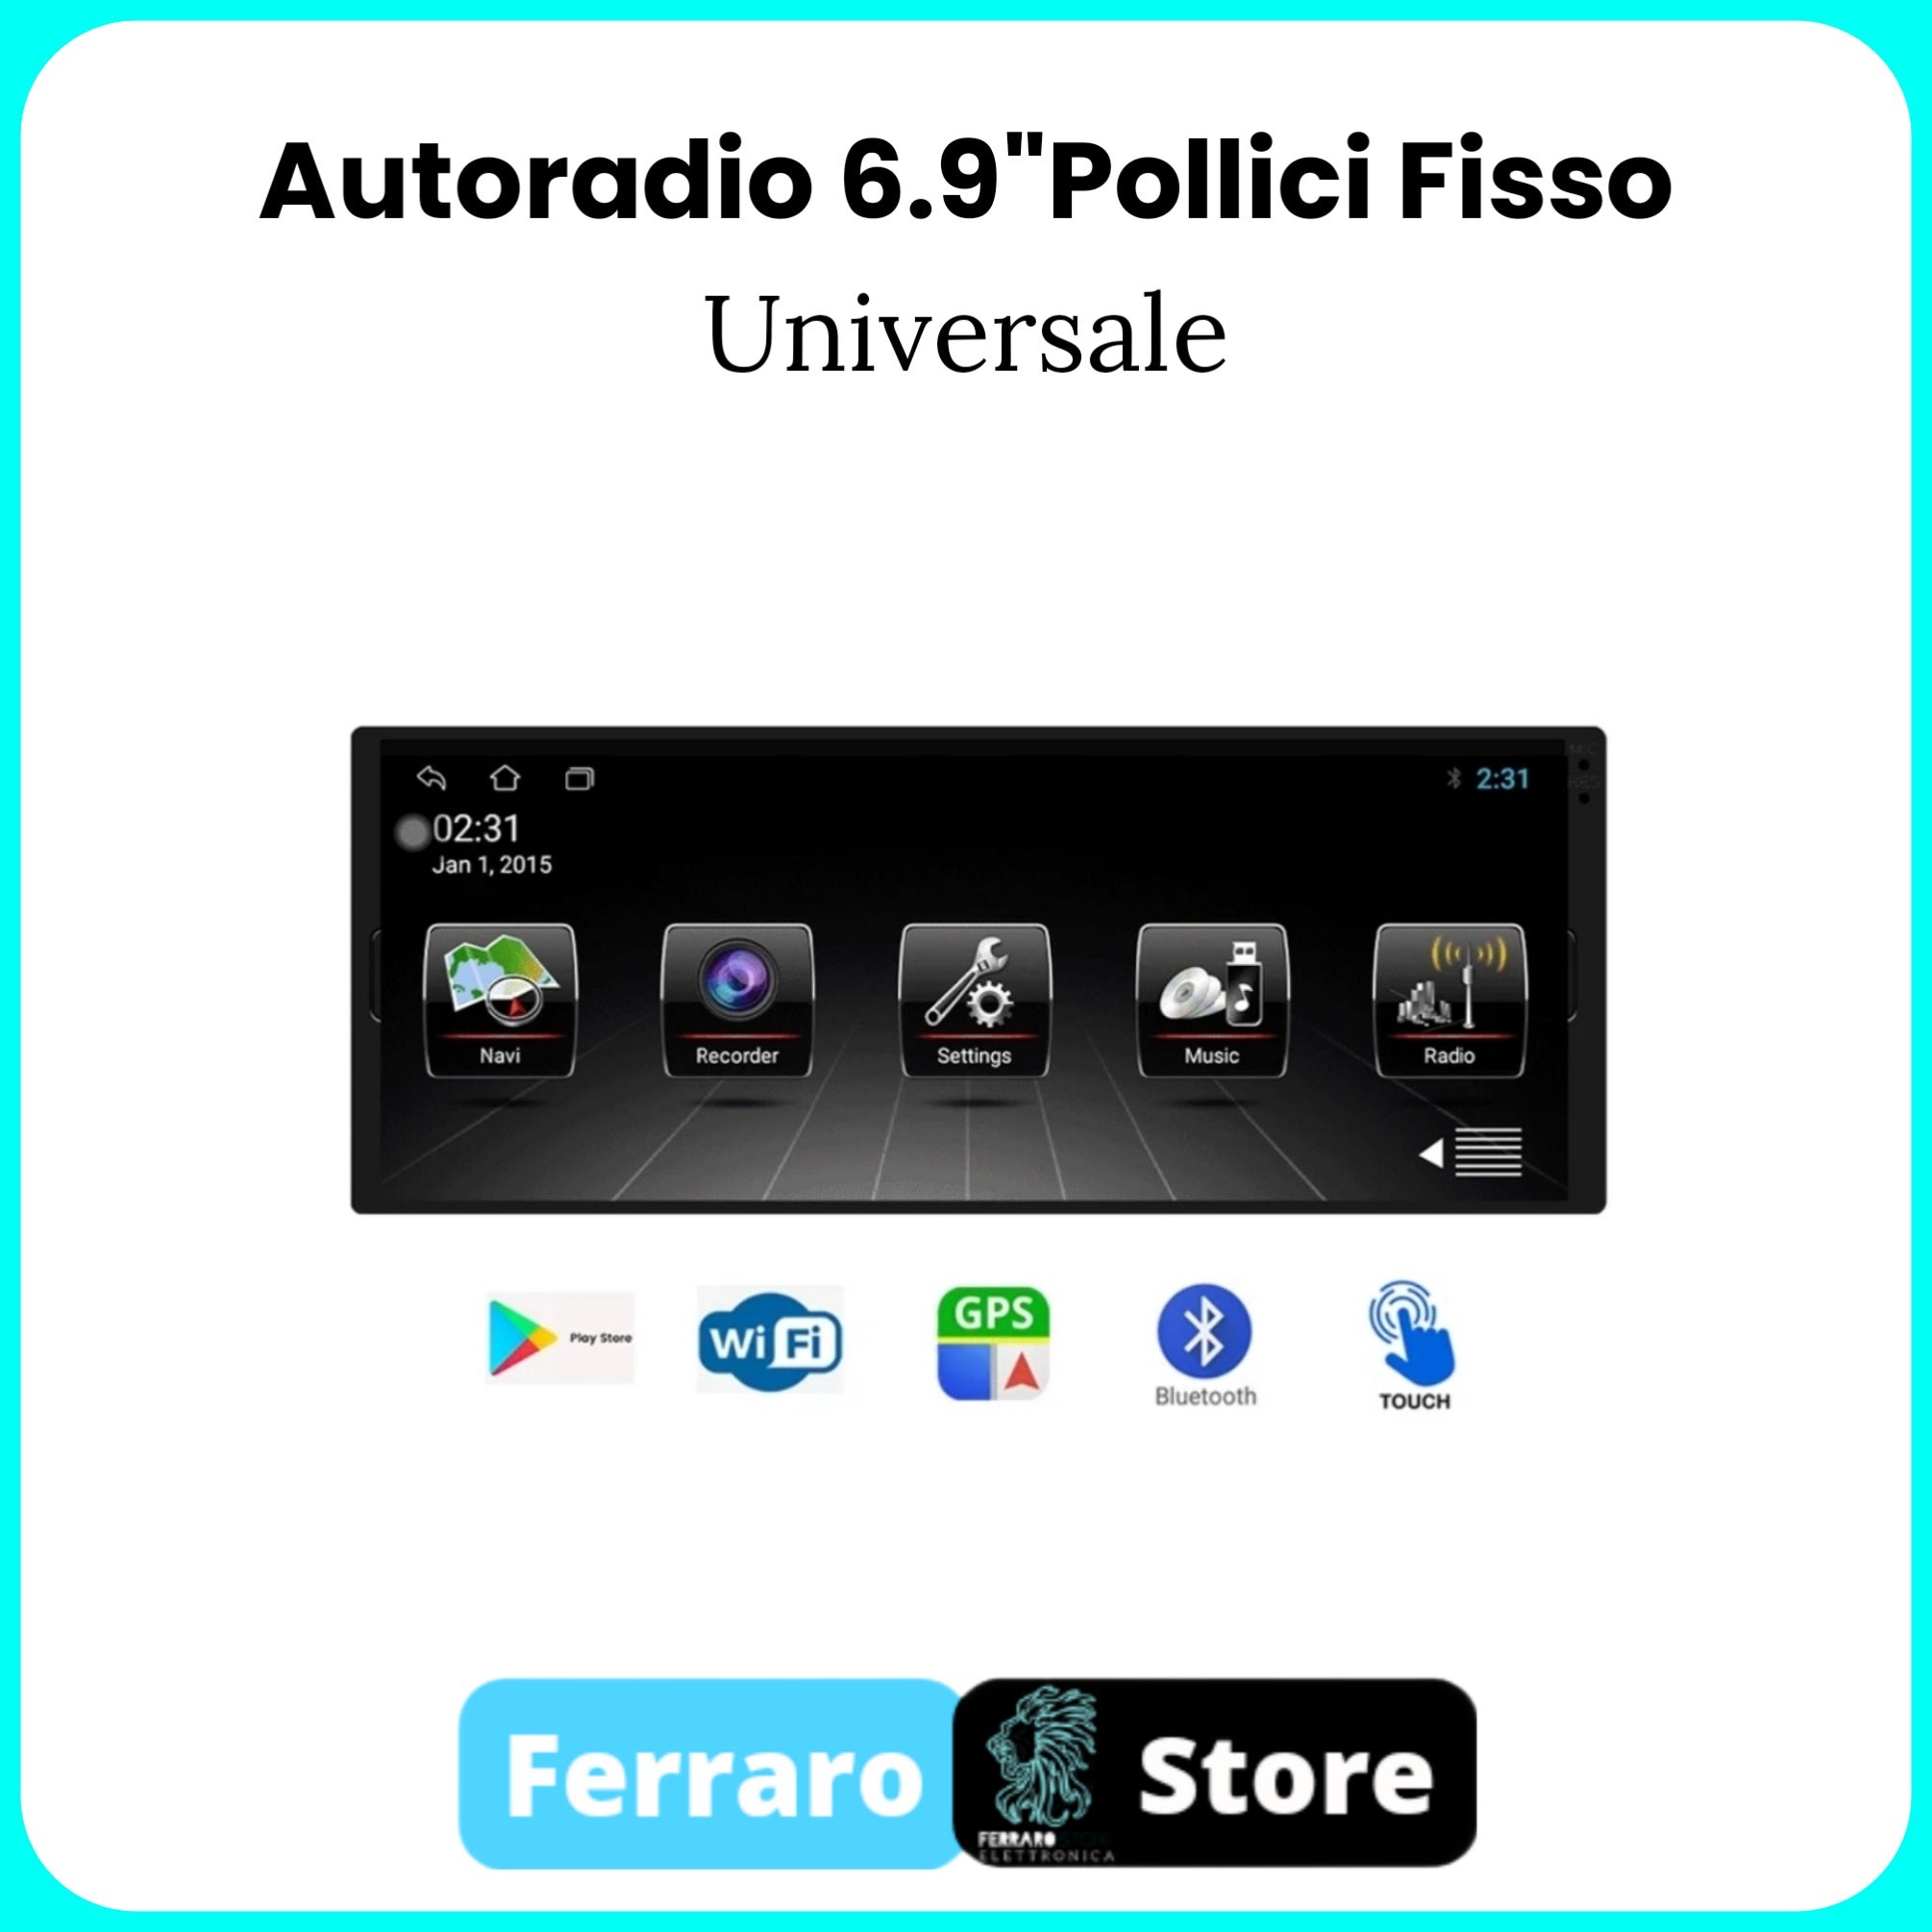 Autoradio Universale [FISSO] - 1Din 6.9"Pollici, Android, GPS, WiFi, Bluetooth, Youtube, Playstore, Radio, Playstore.